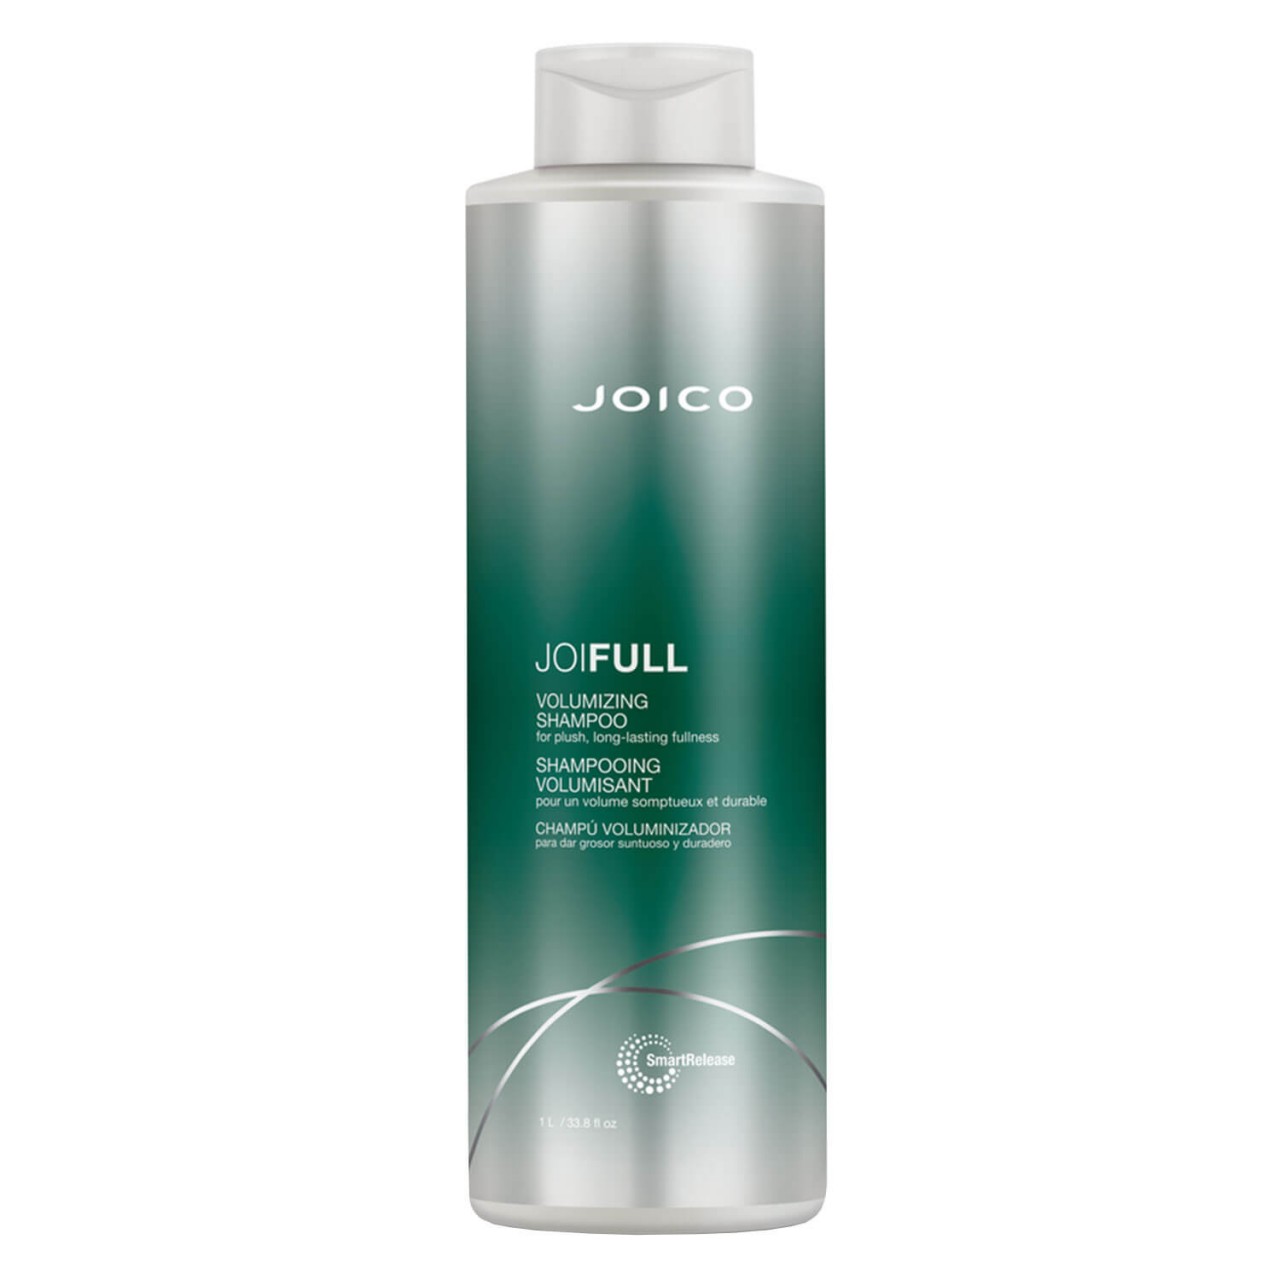 JoiFull - Volumizing Shampoo von Joico